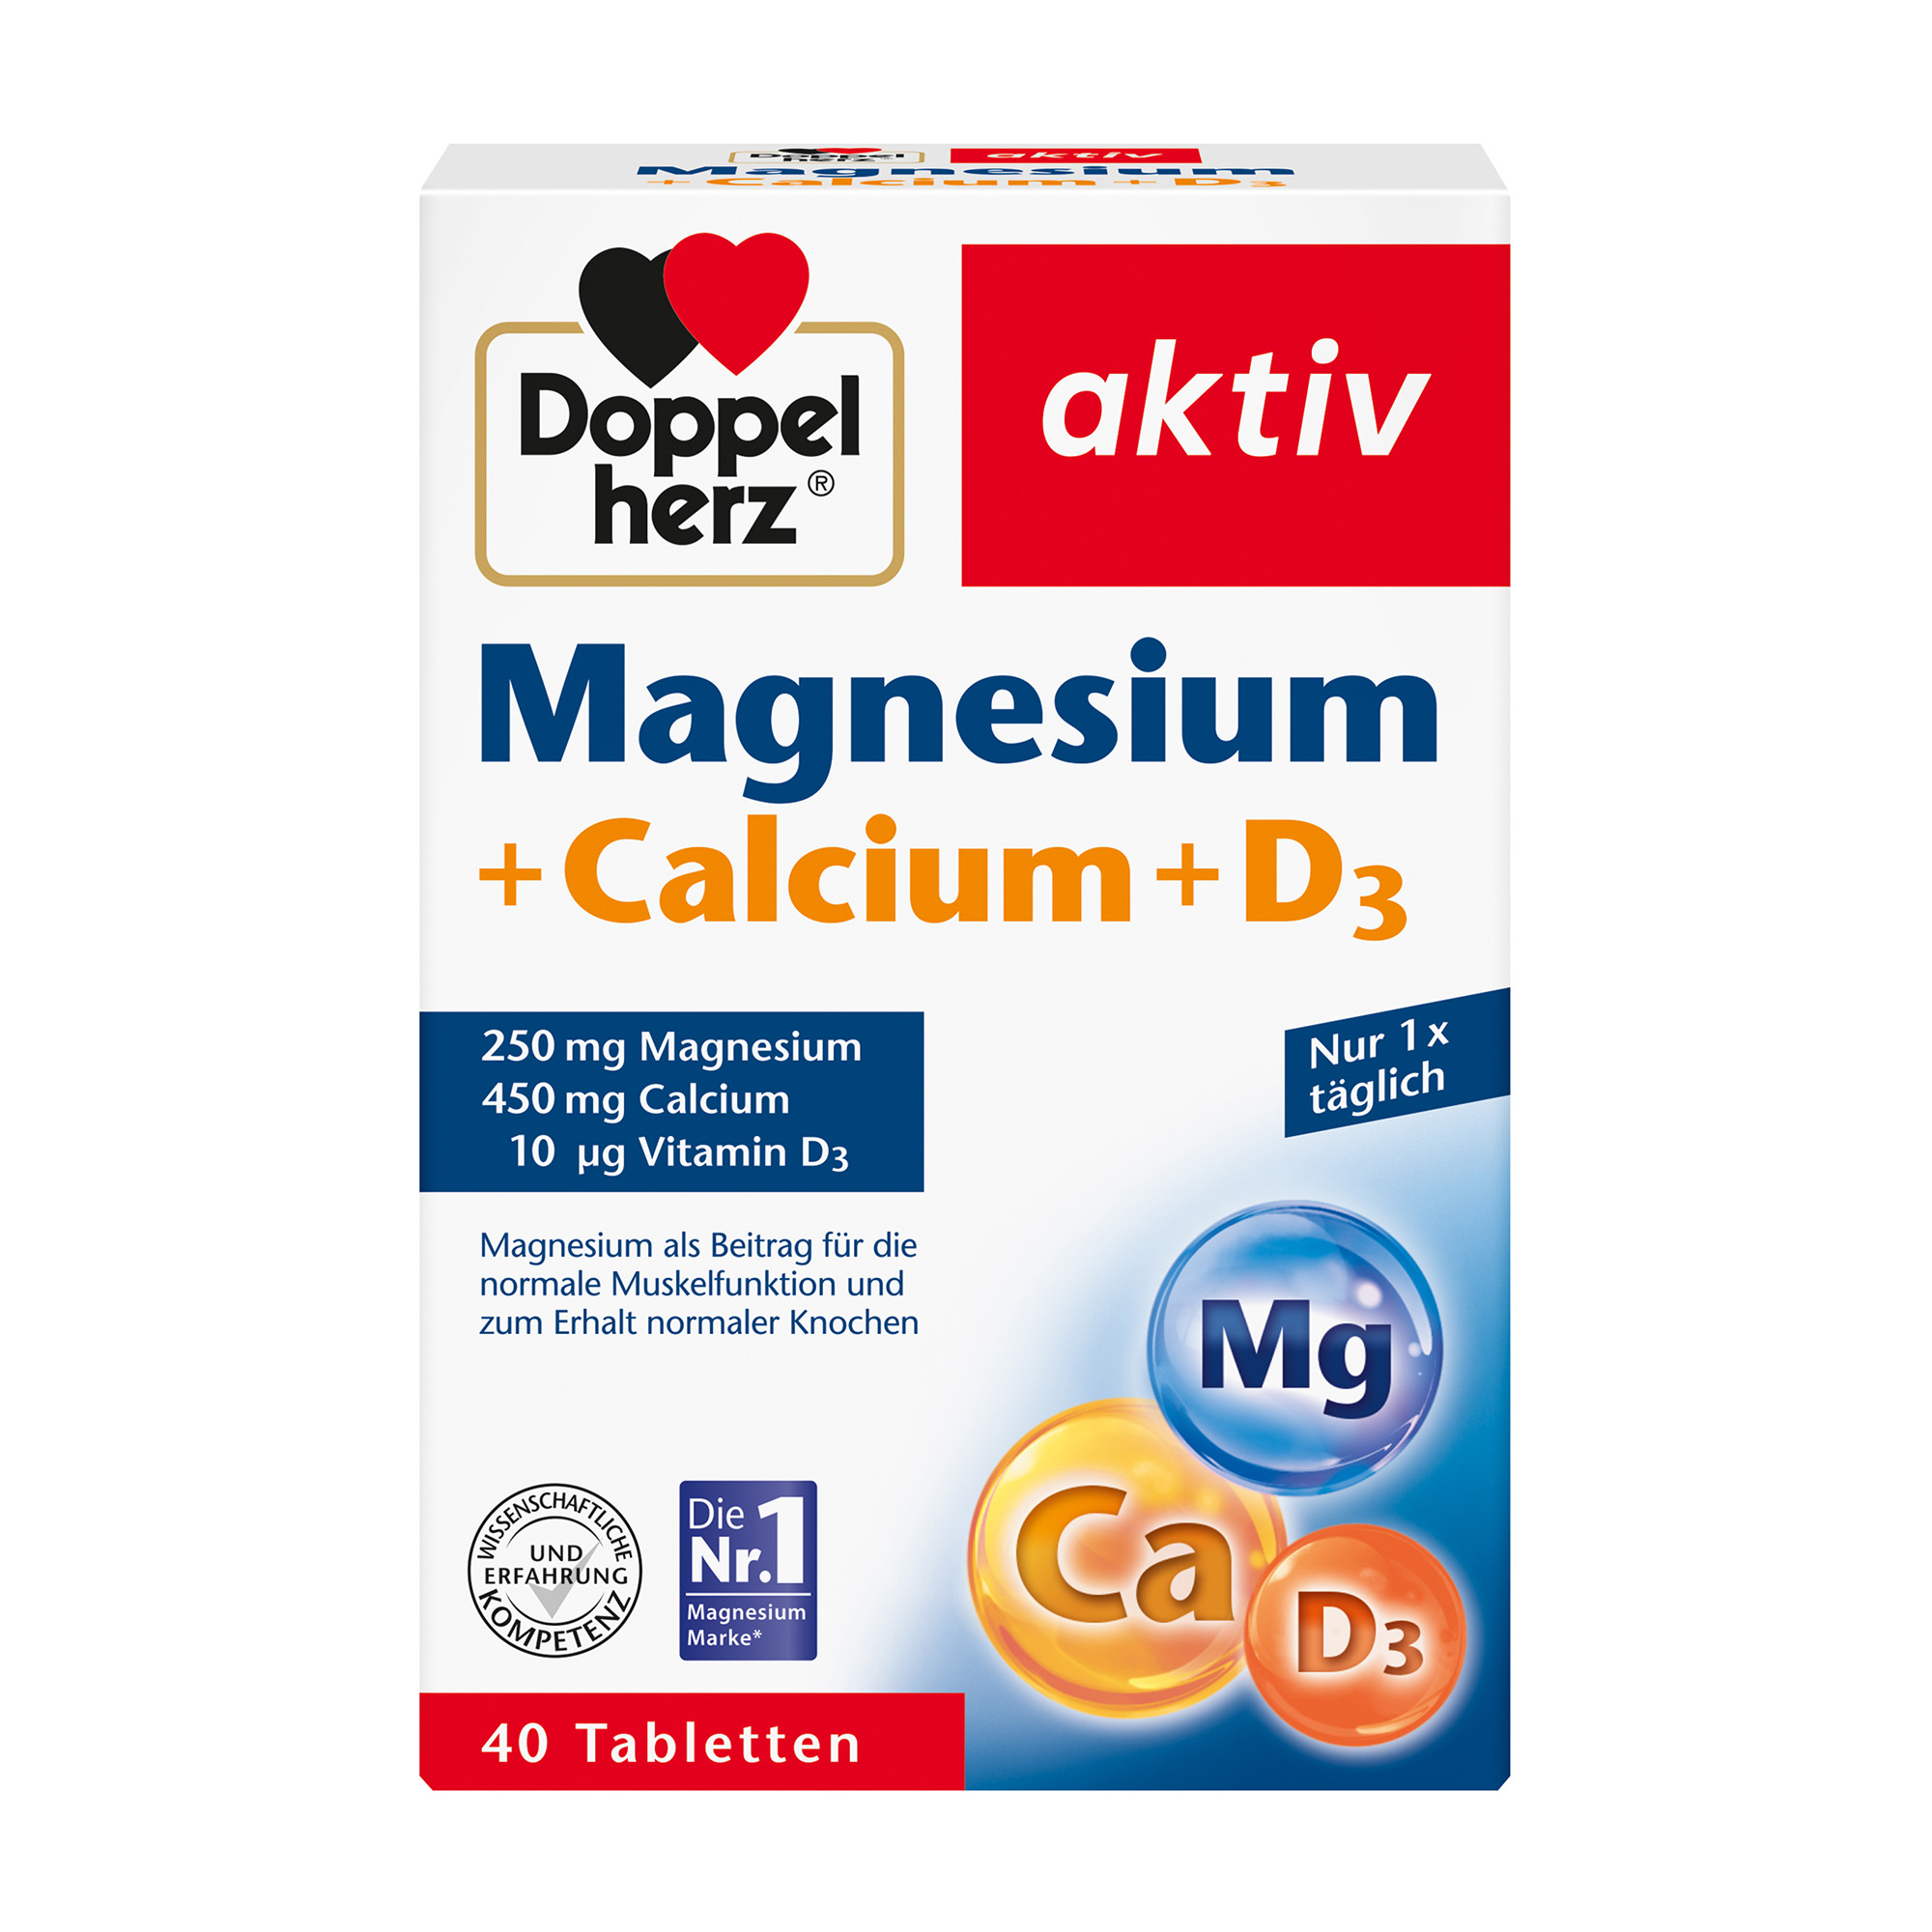 Doppelherz aktiv Magnesium + Calcium + Vitamin D3, 40 Tablets